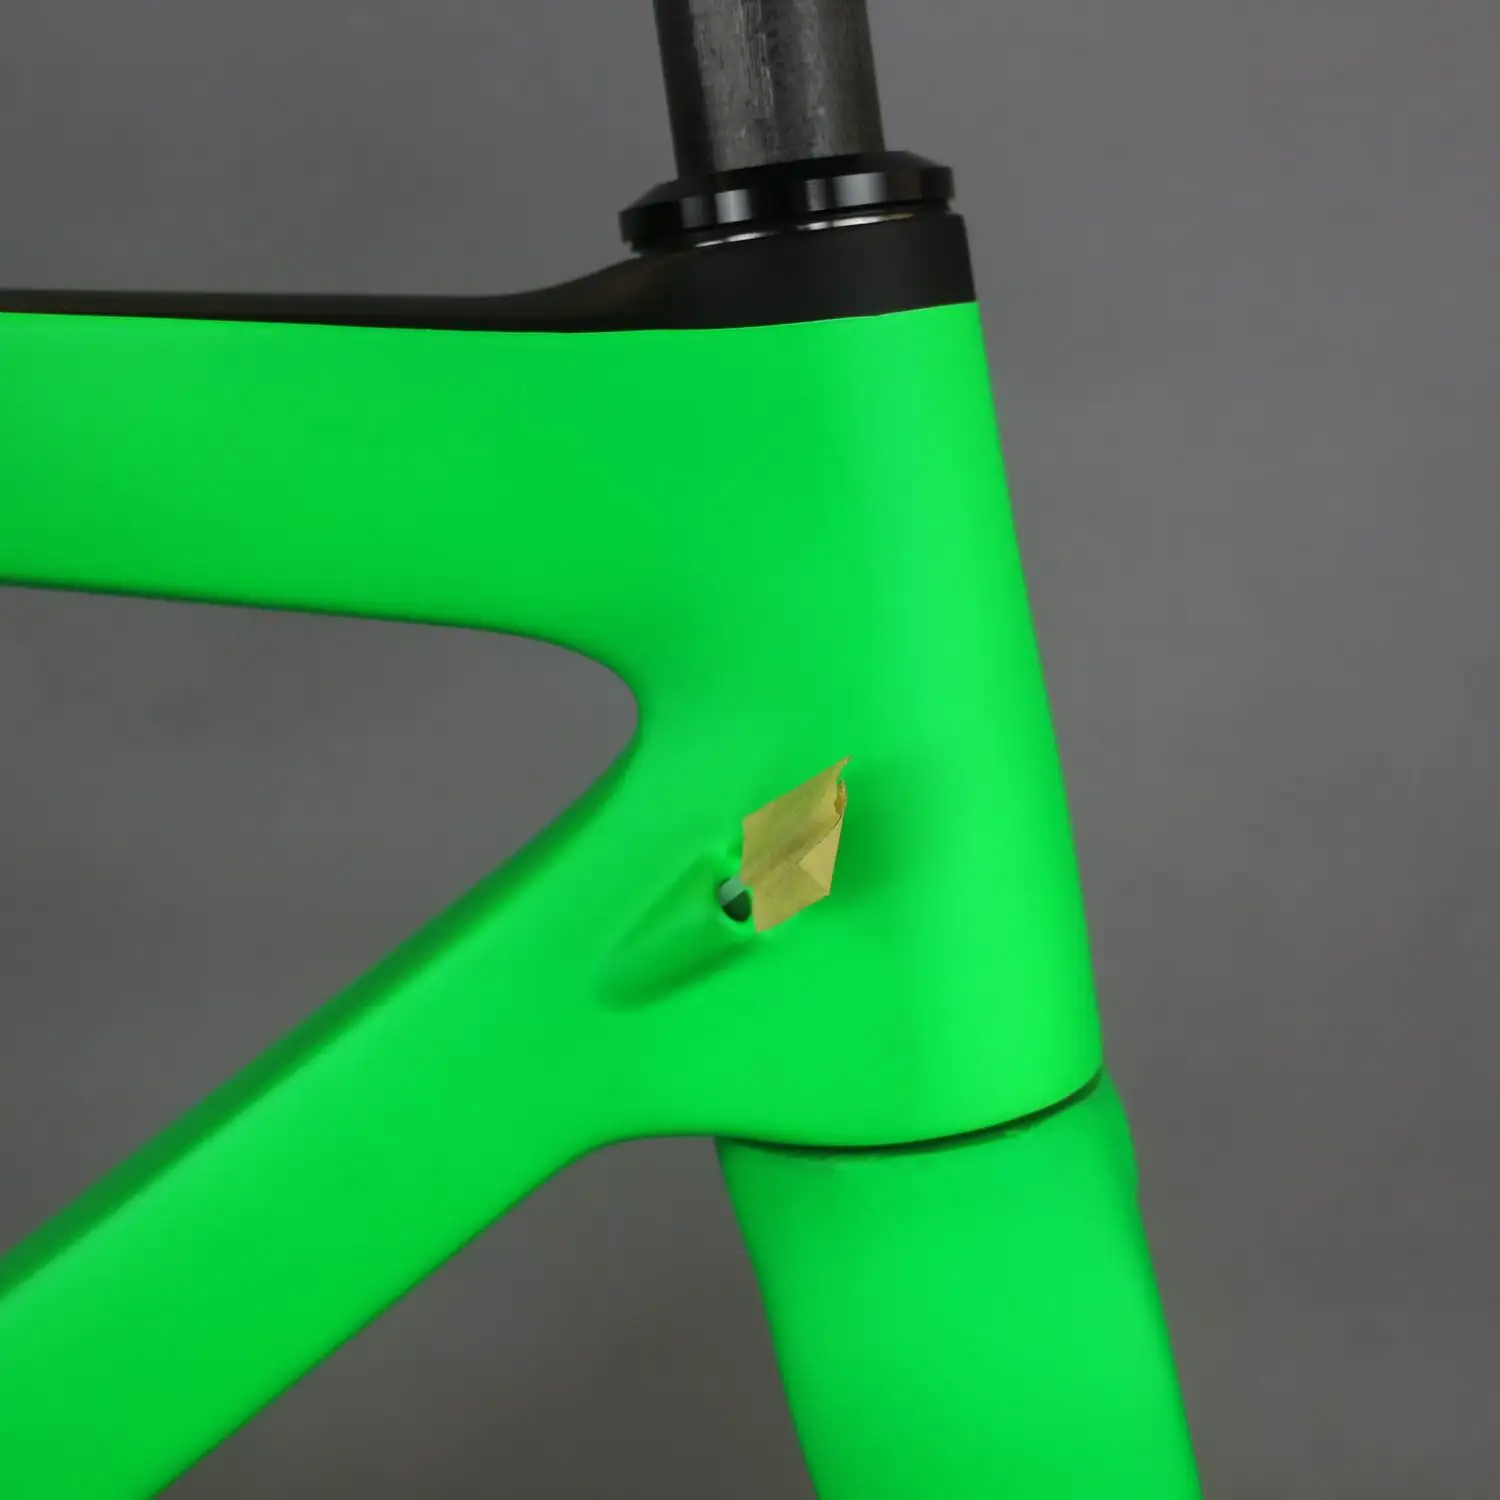 Sale 2019 T1000  frameset SERAPH full carbon fiber road bike framehigh quality  FM686 accepts custom paint 1